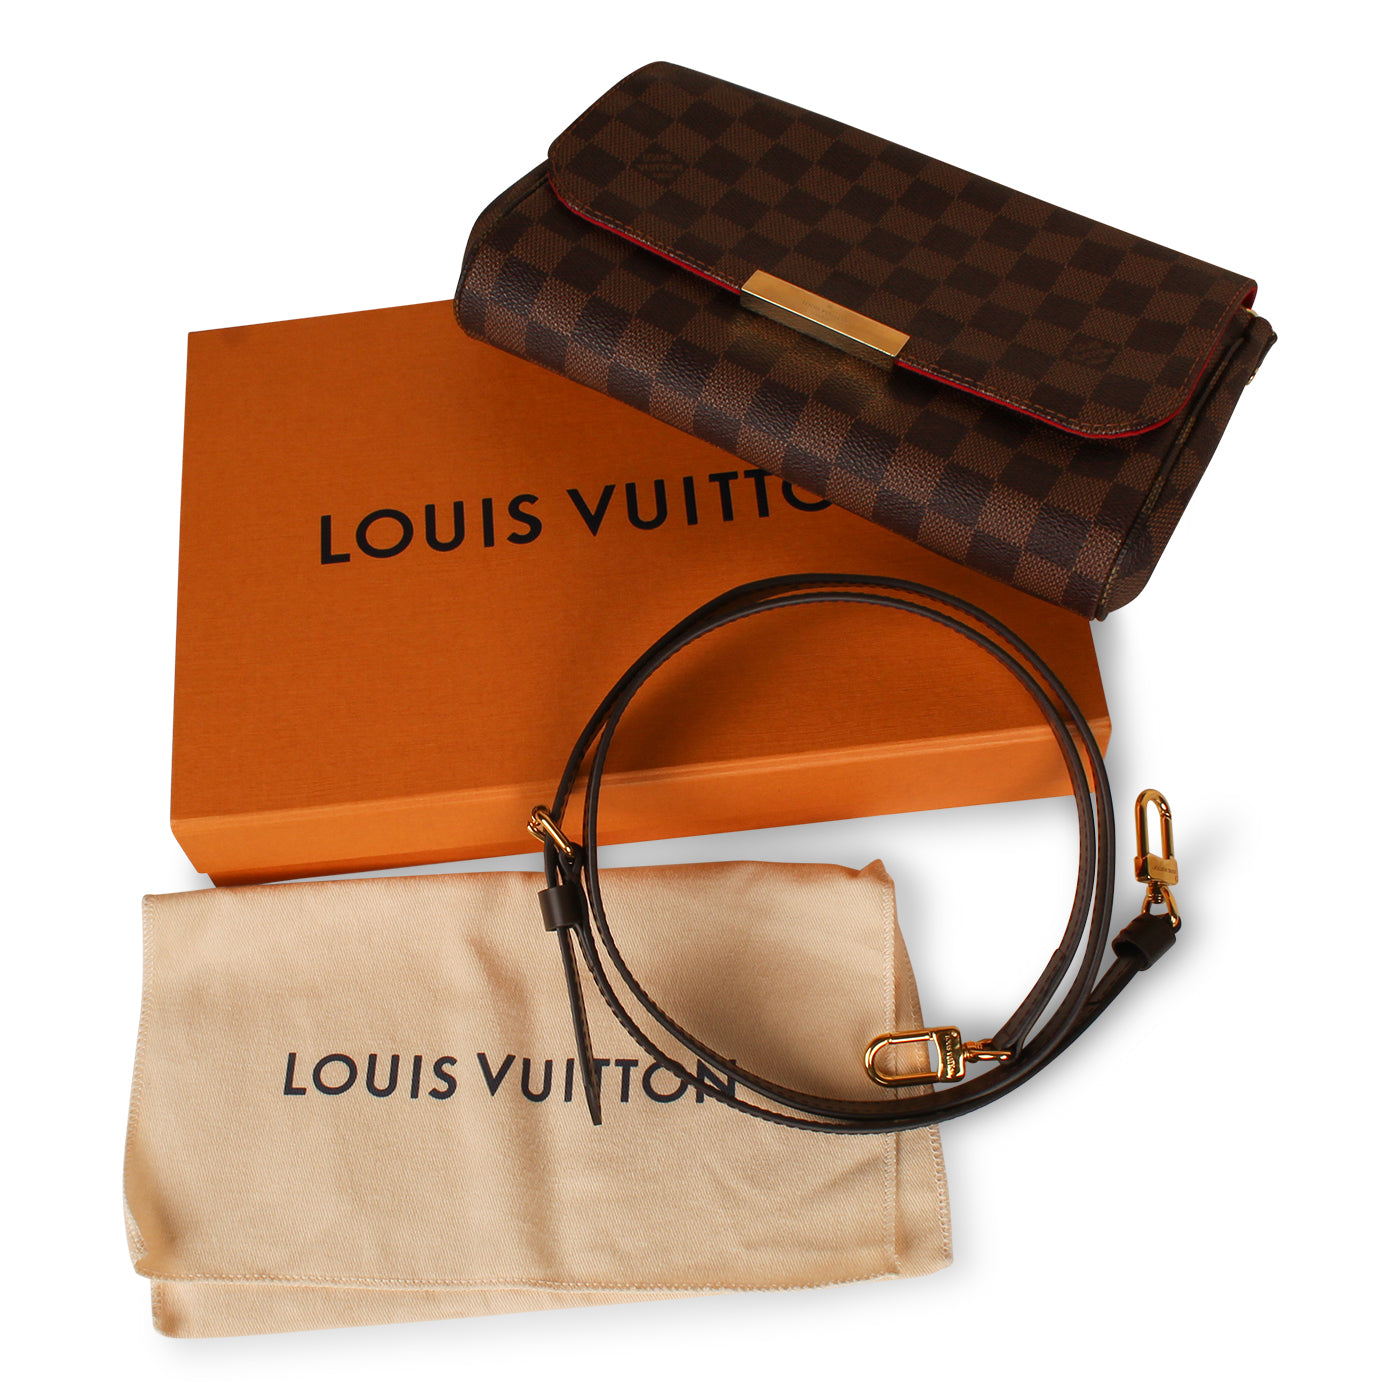 SOLD: Louis Vuitton Favorite MM Damier Ebene  Louis vuitton favorite mm,  Louis vuitton, Louis vuitton favorite